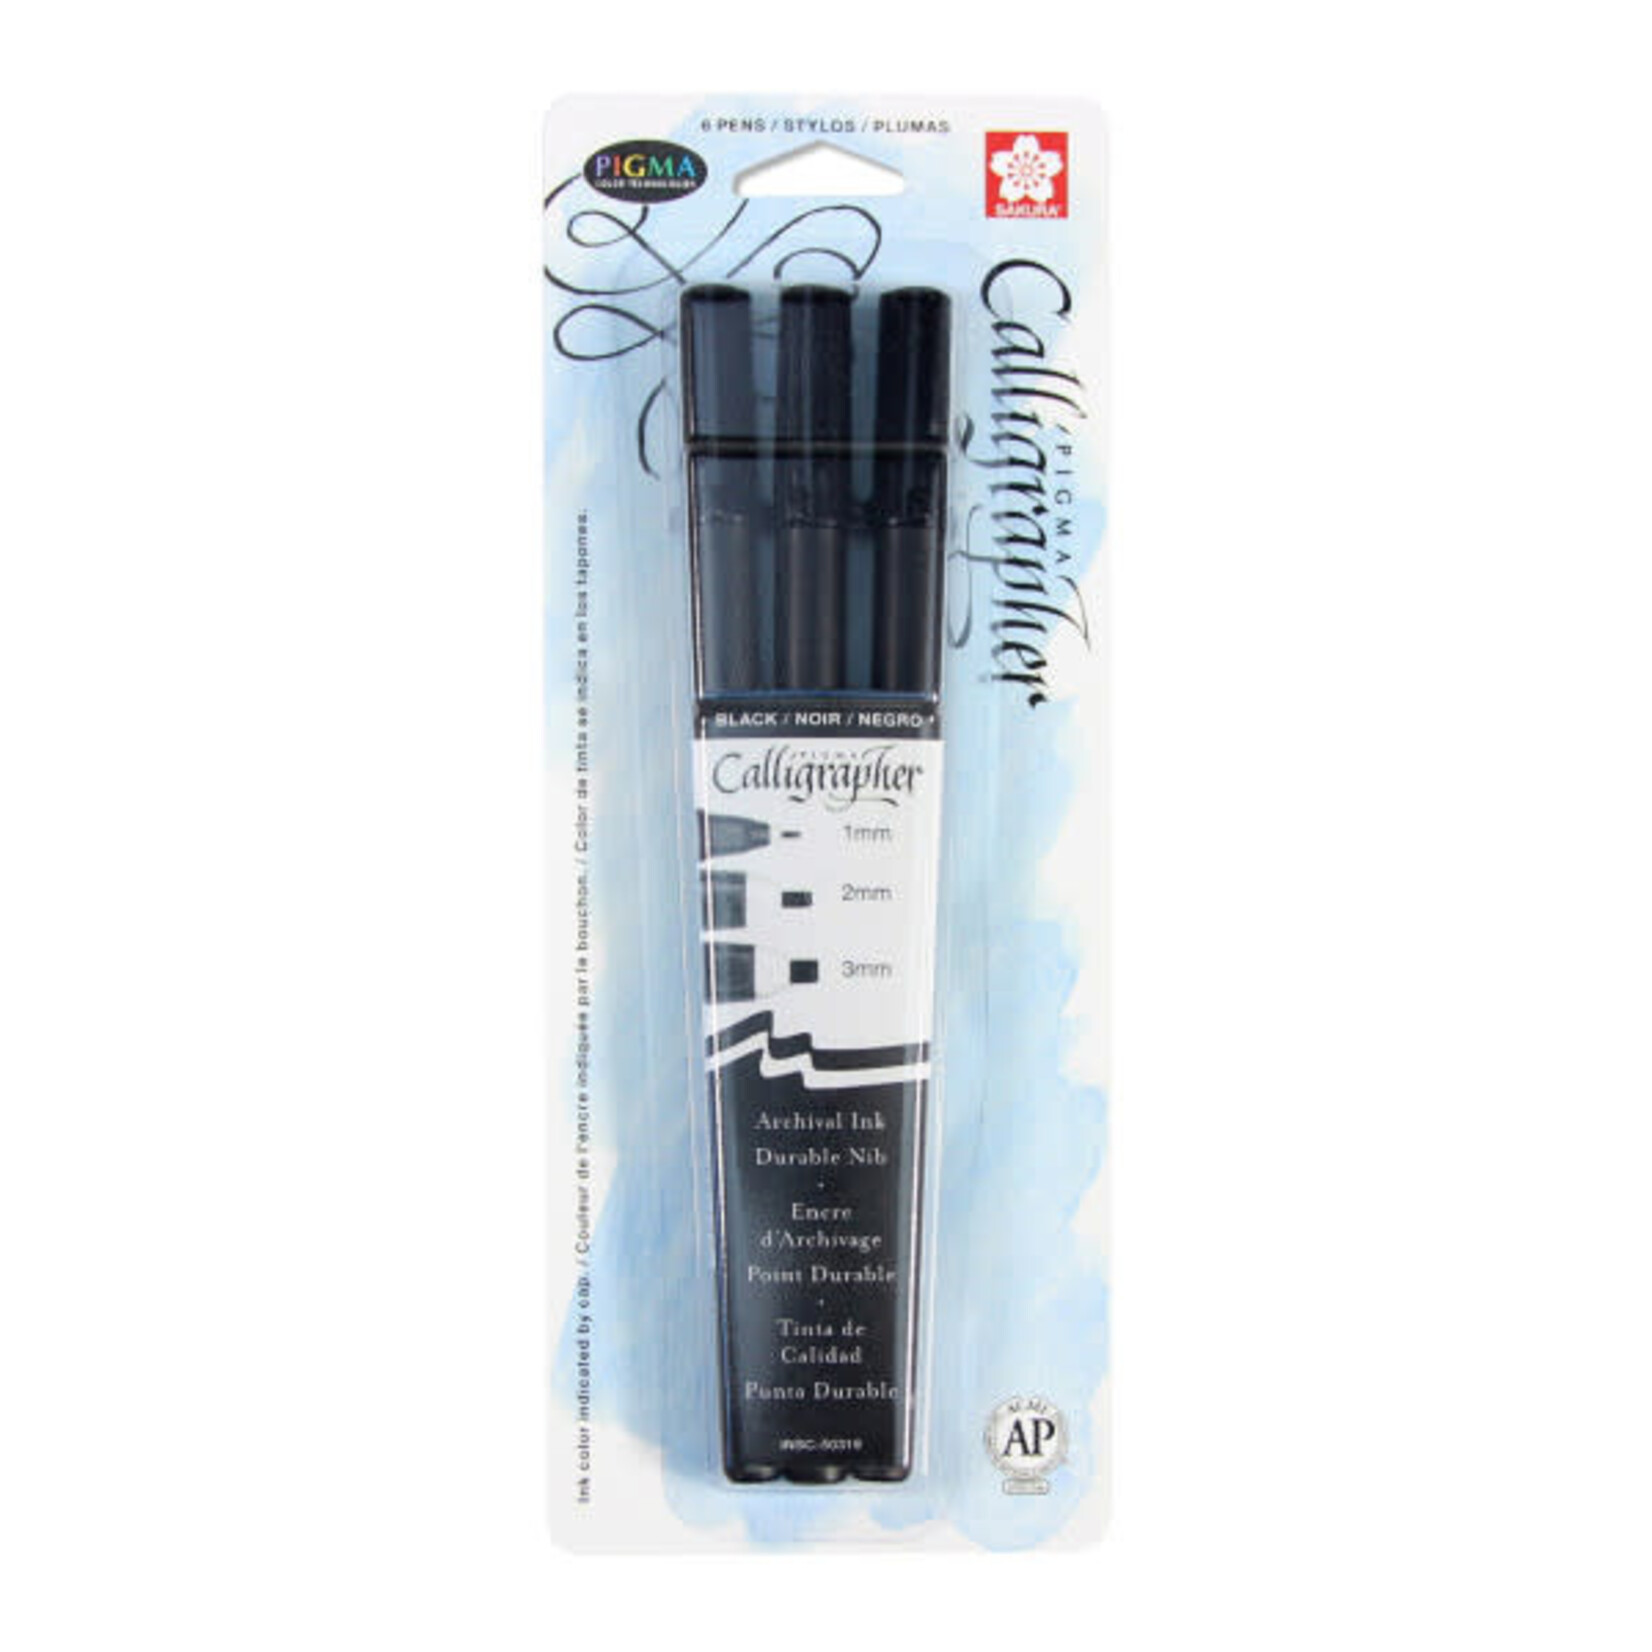 Sakura Pigma Calligrapher Pens, 3-Pen Set - Black (1mm, 2mm, 3mm)